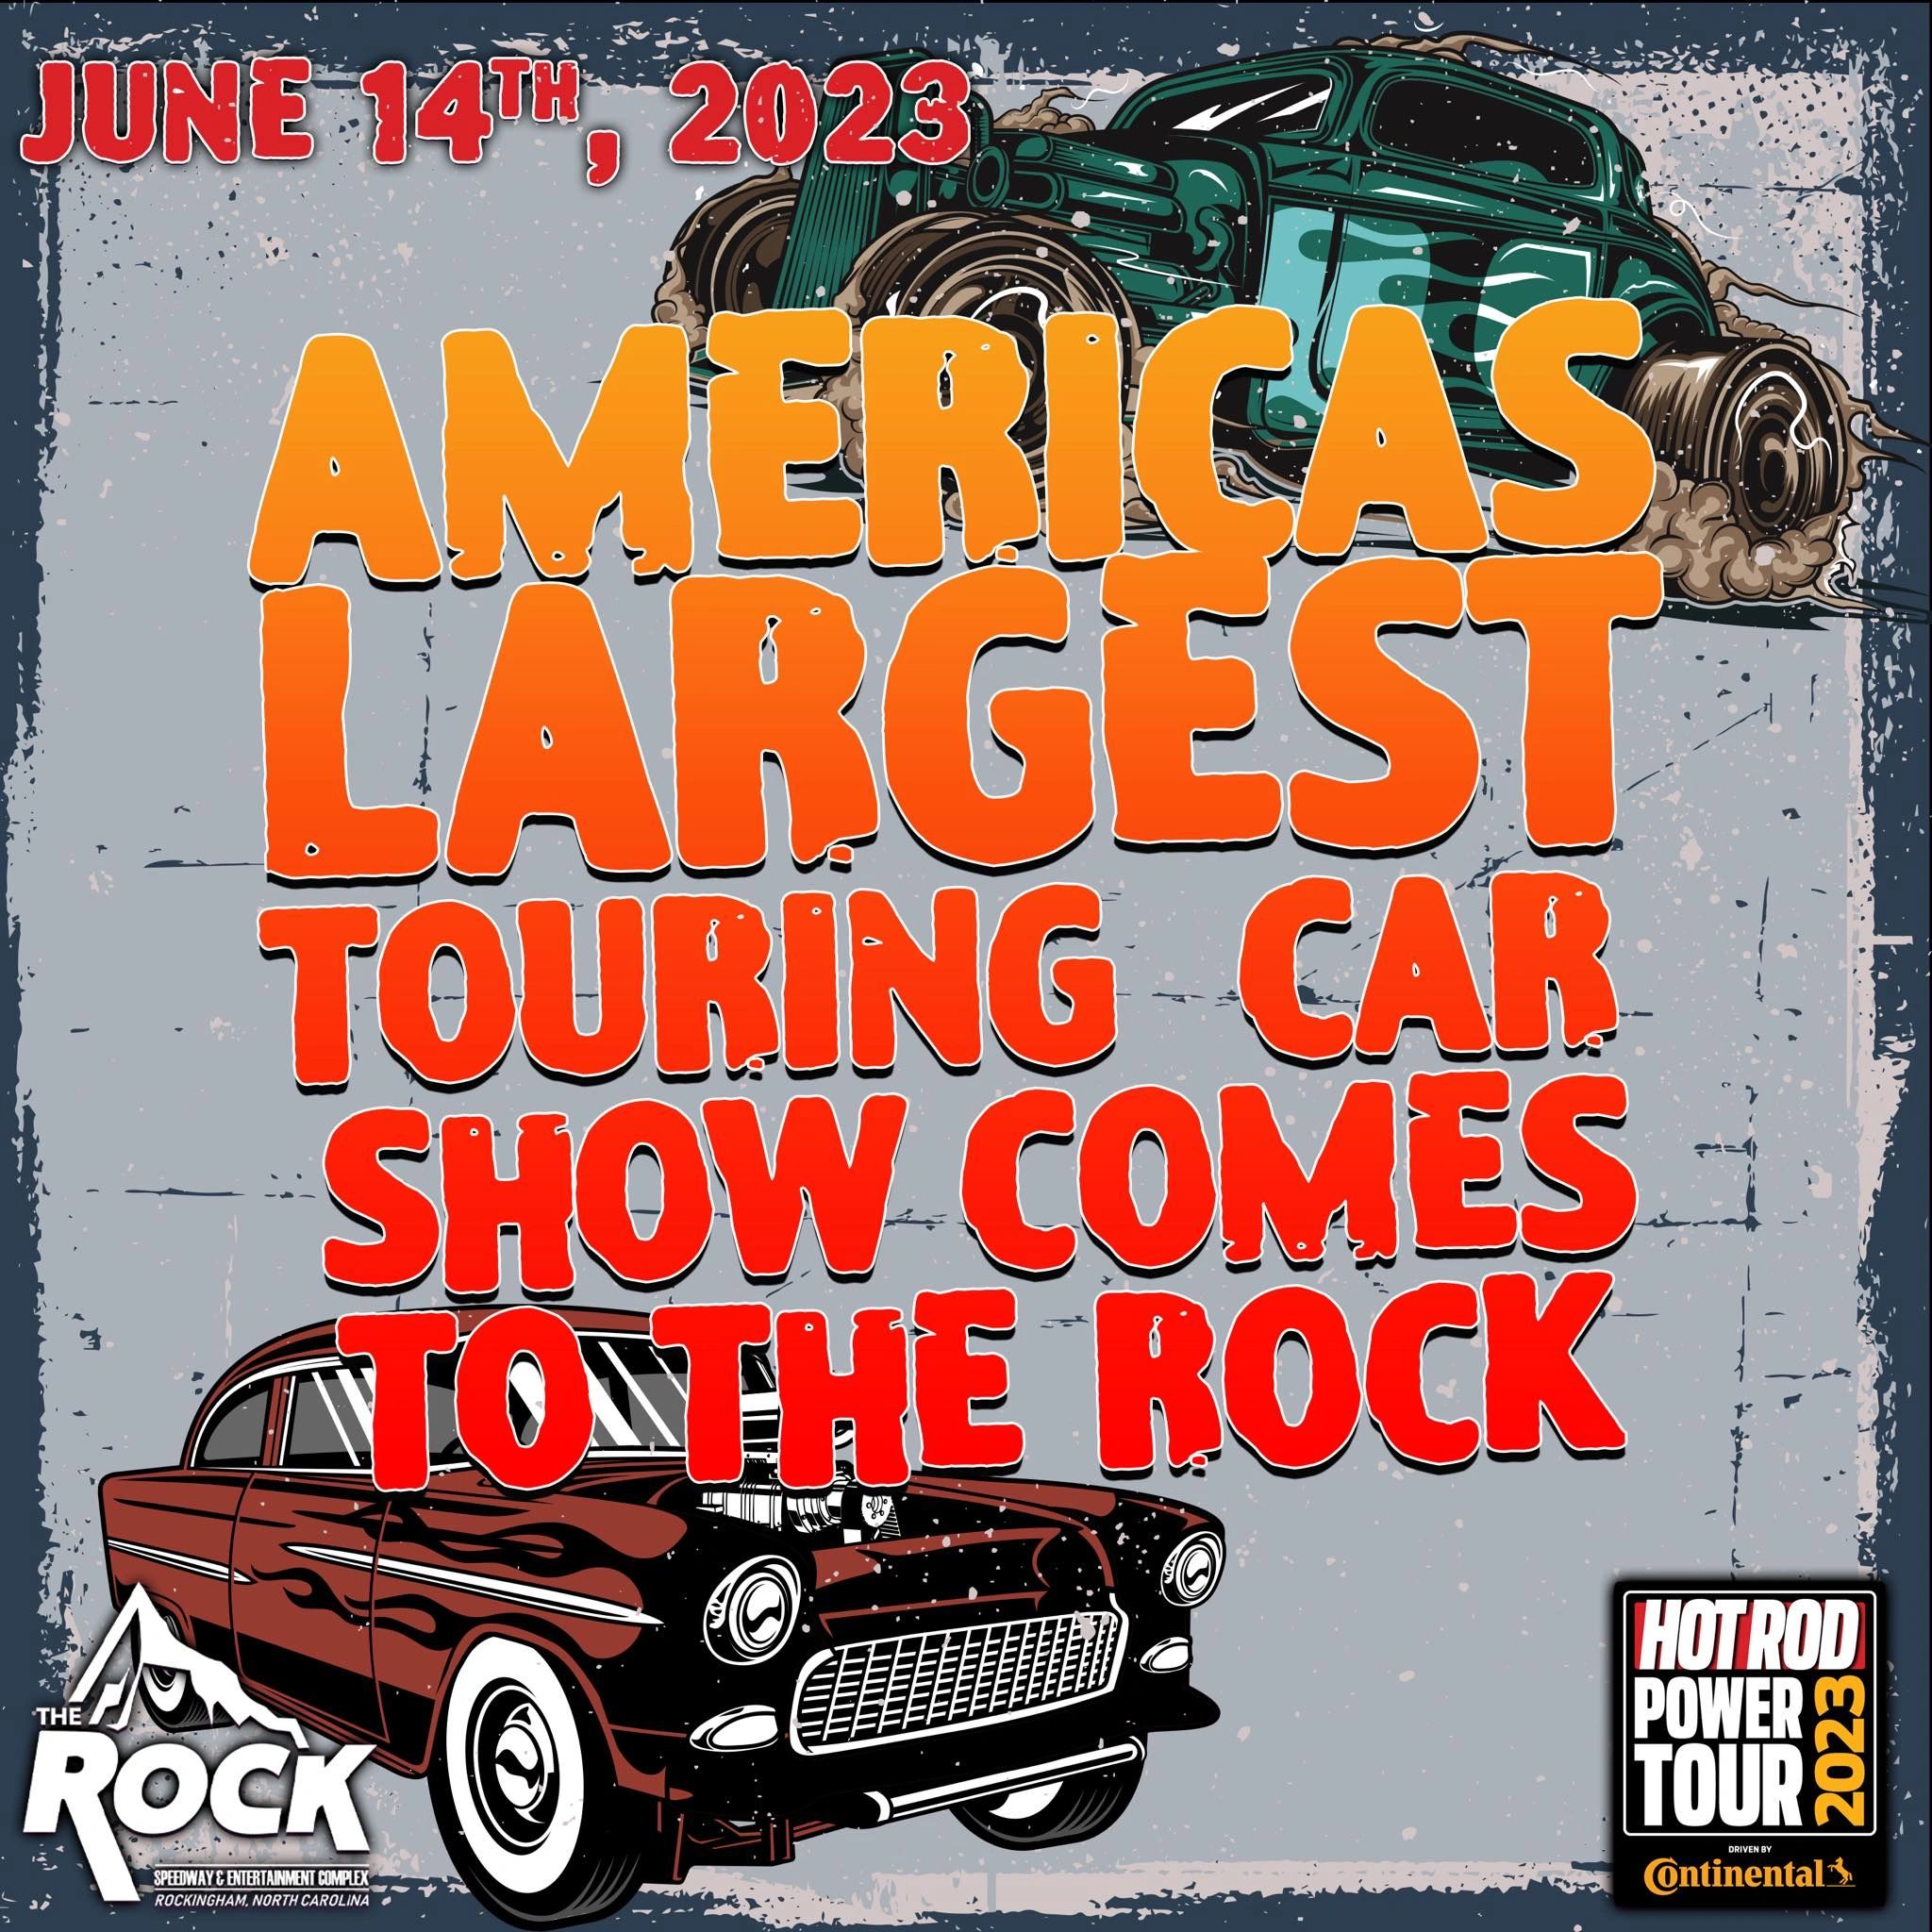 Hot Rod Power Tour 2023 at Rockingham Speedway June 14!